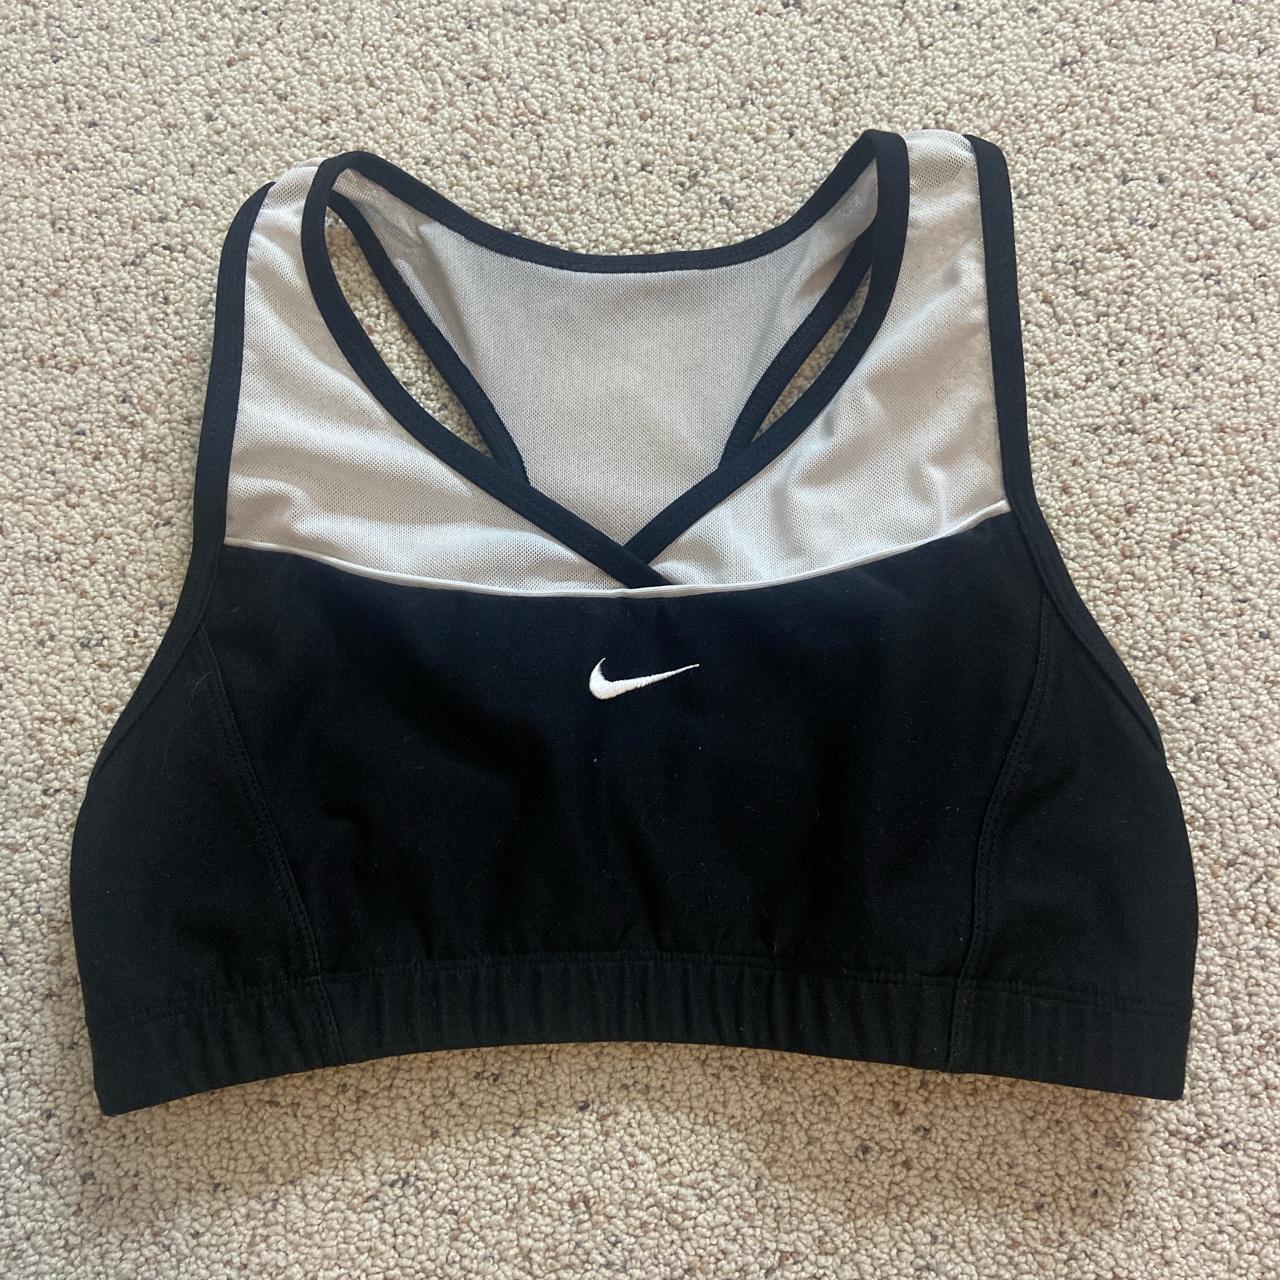 - Black and white Nike sports bra - Great quality,... - Depop